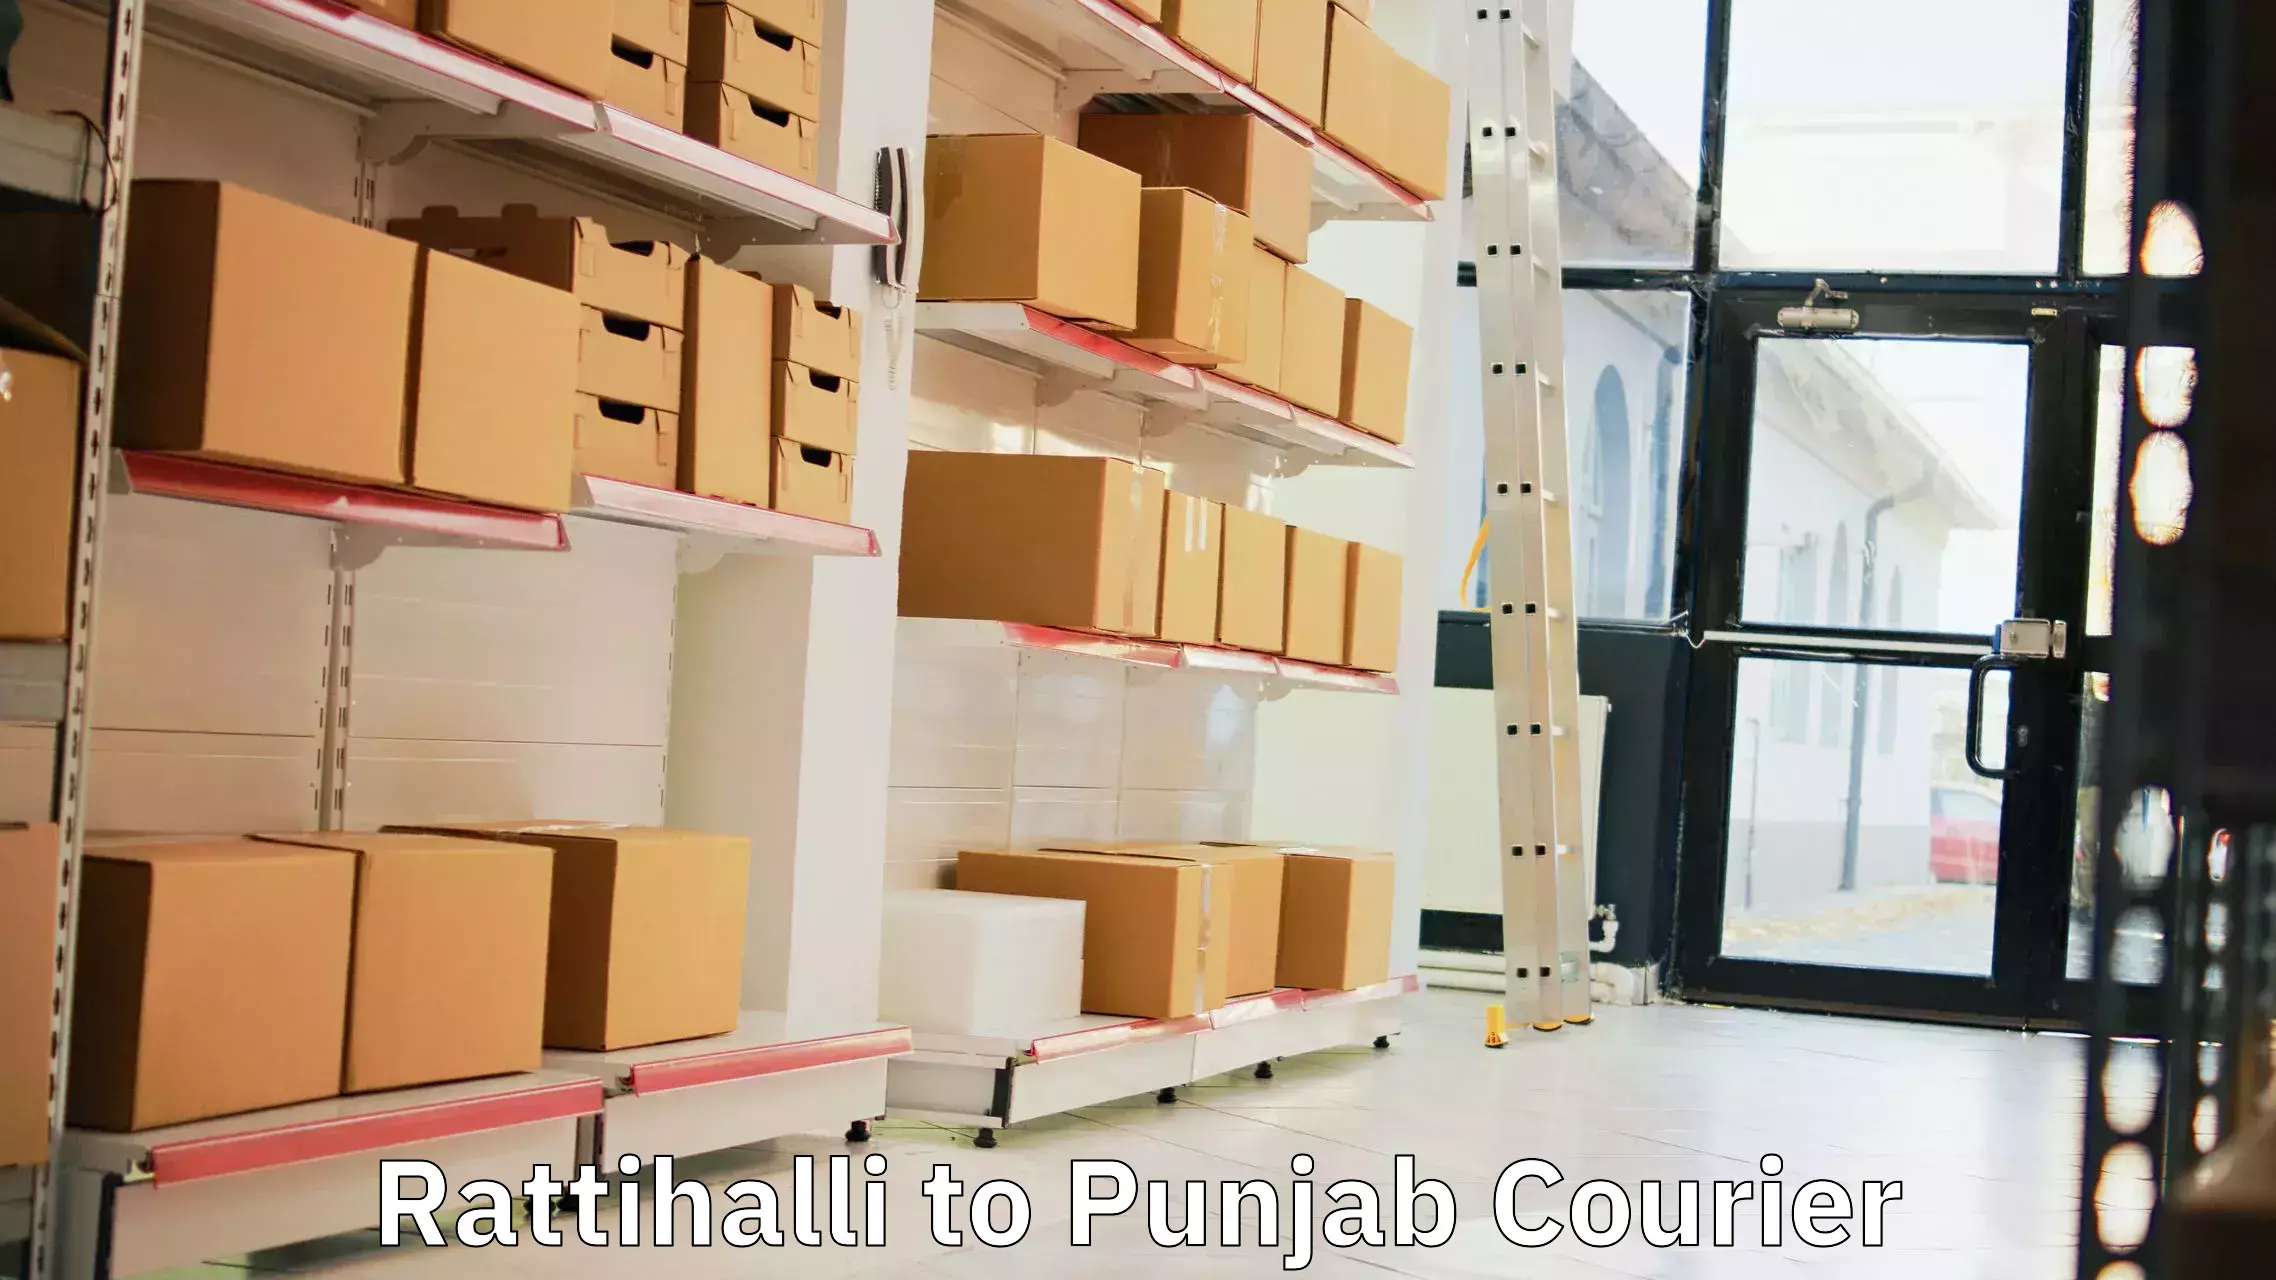 Courier service efficiency Rattihalli to Central University of Punjab Bathinda